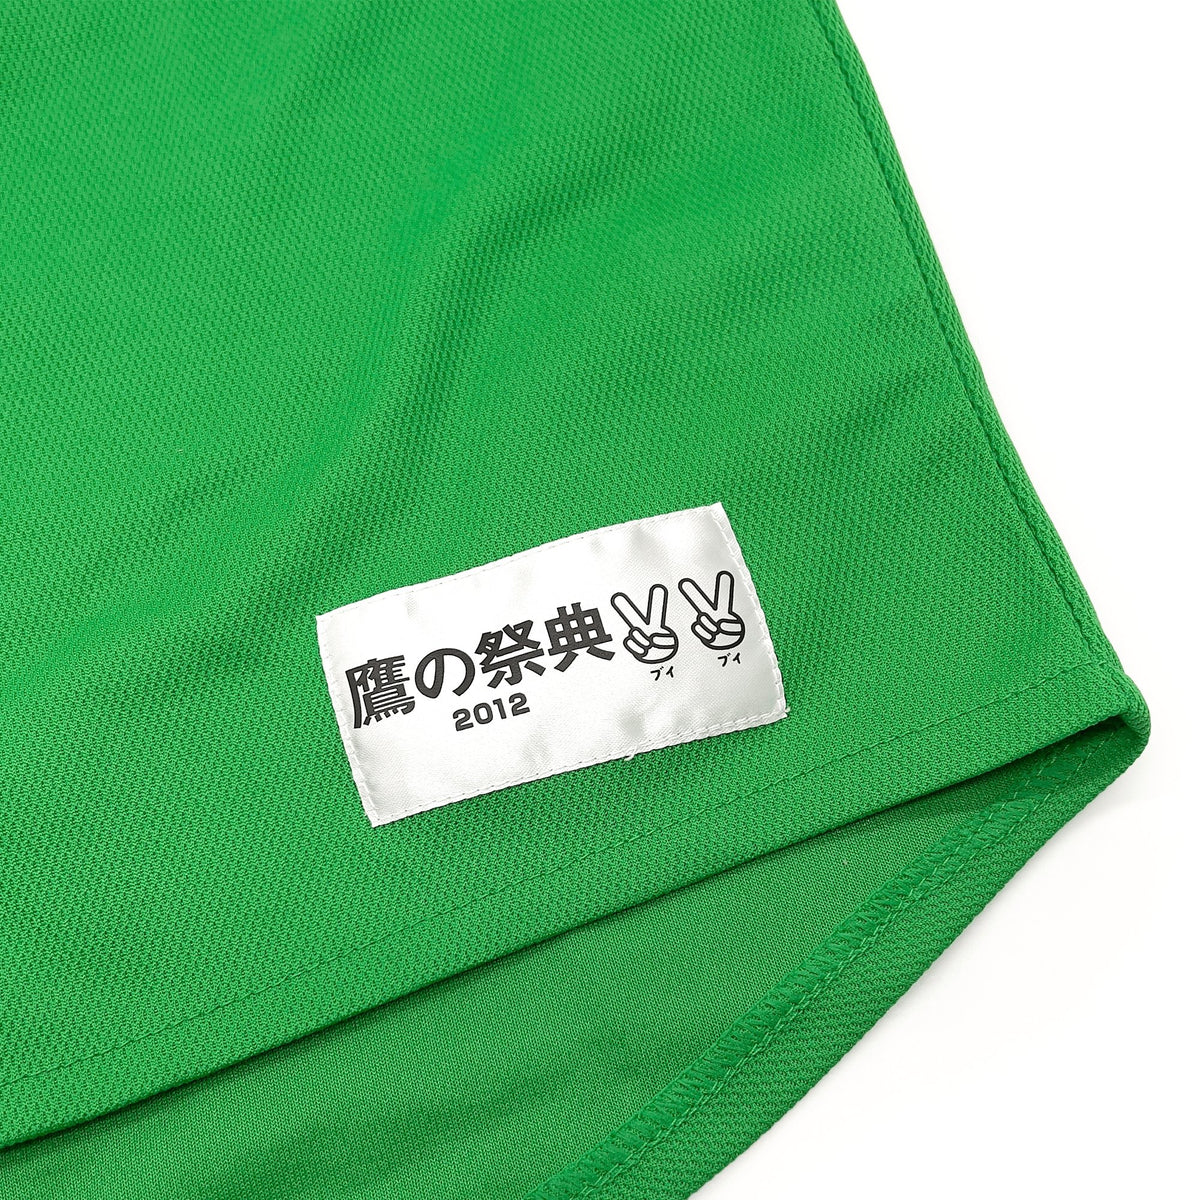 Limited Edition Retro NPB Japan Softbank Hawks Baseball Jersey 2012 Green - Sugoi JDM